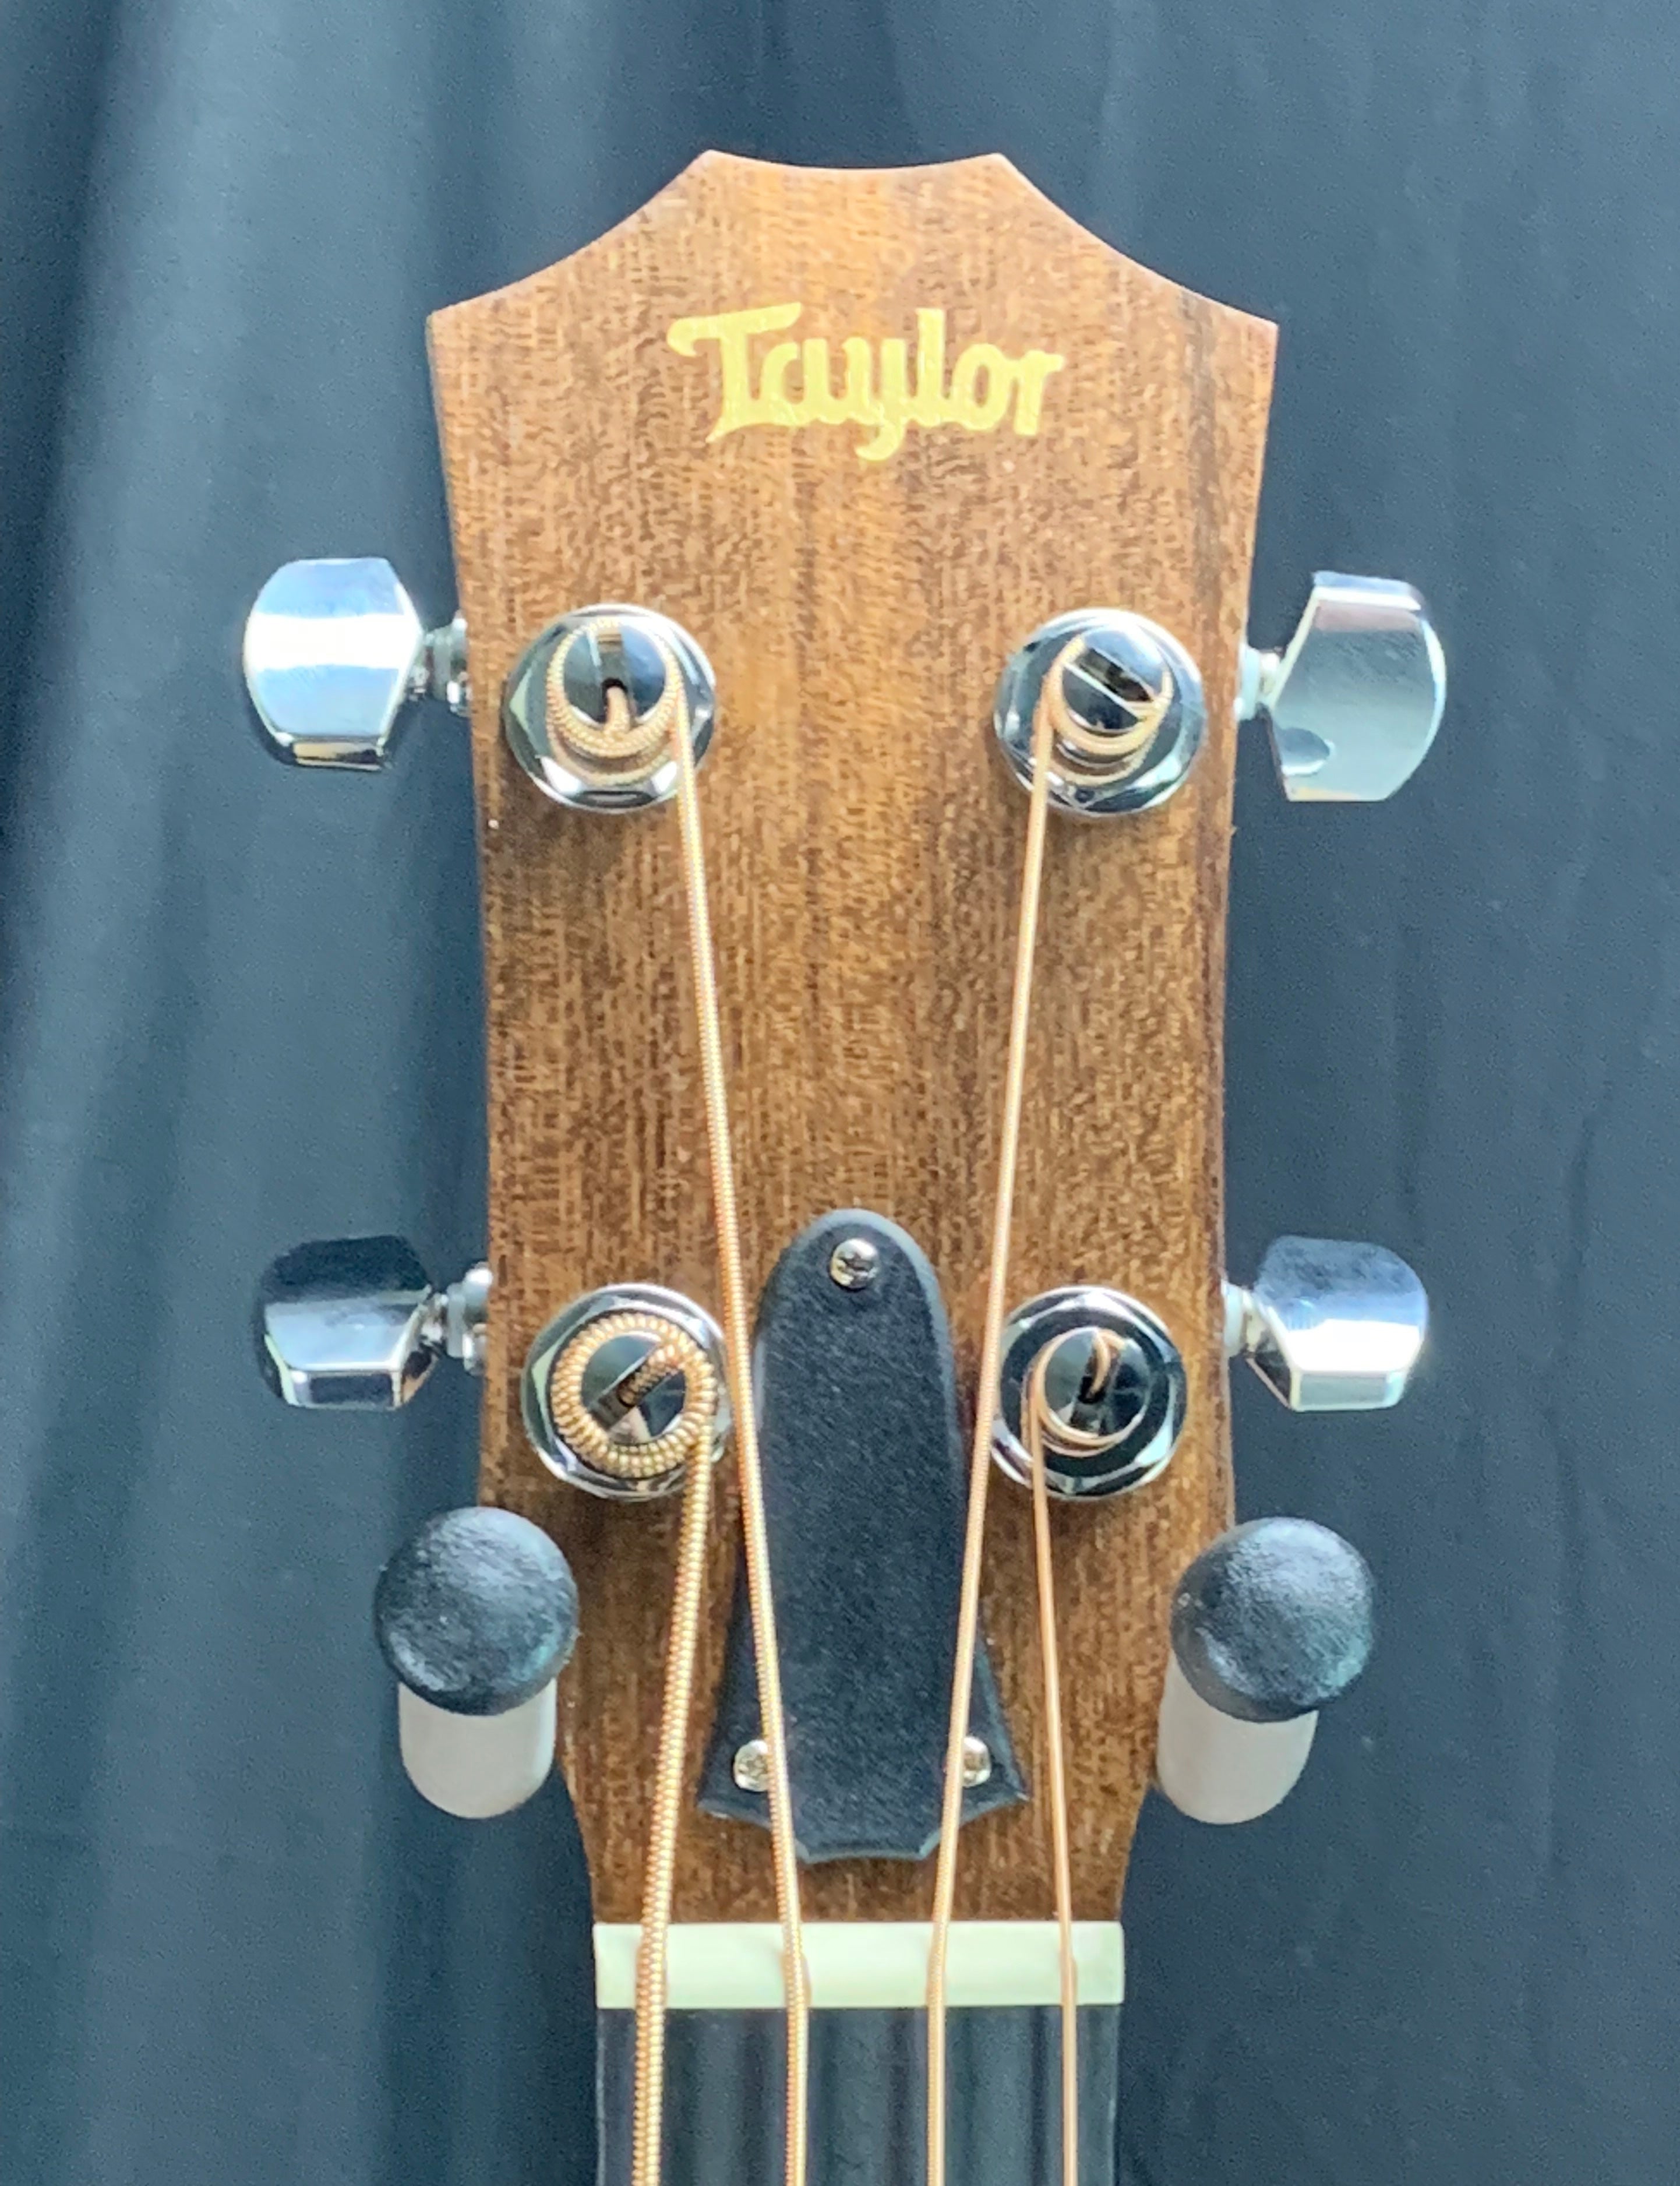 【SALE】Taylor GS Mini-e Maple Bass アコースティックベース ほぼ未使用 2018年11月29日製 国内正規品 山野器にて購入 アコースティックベース